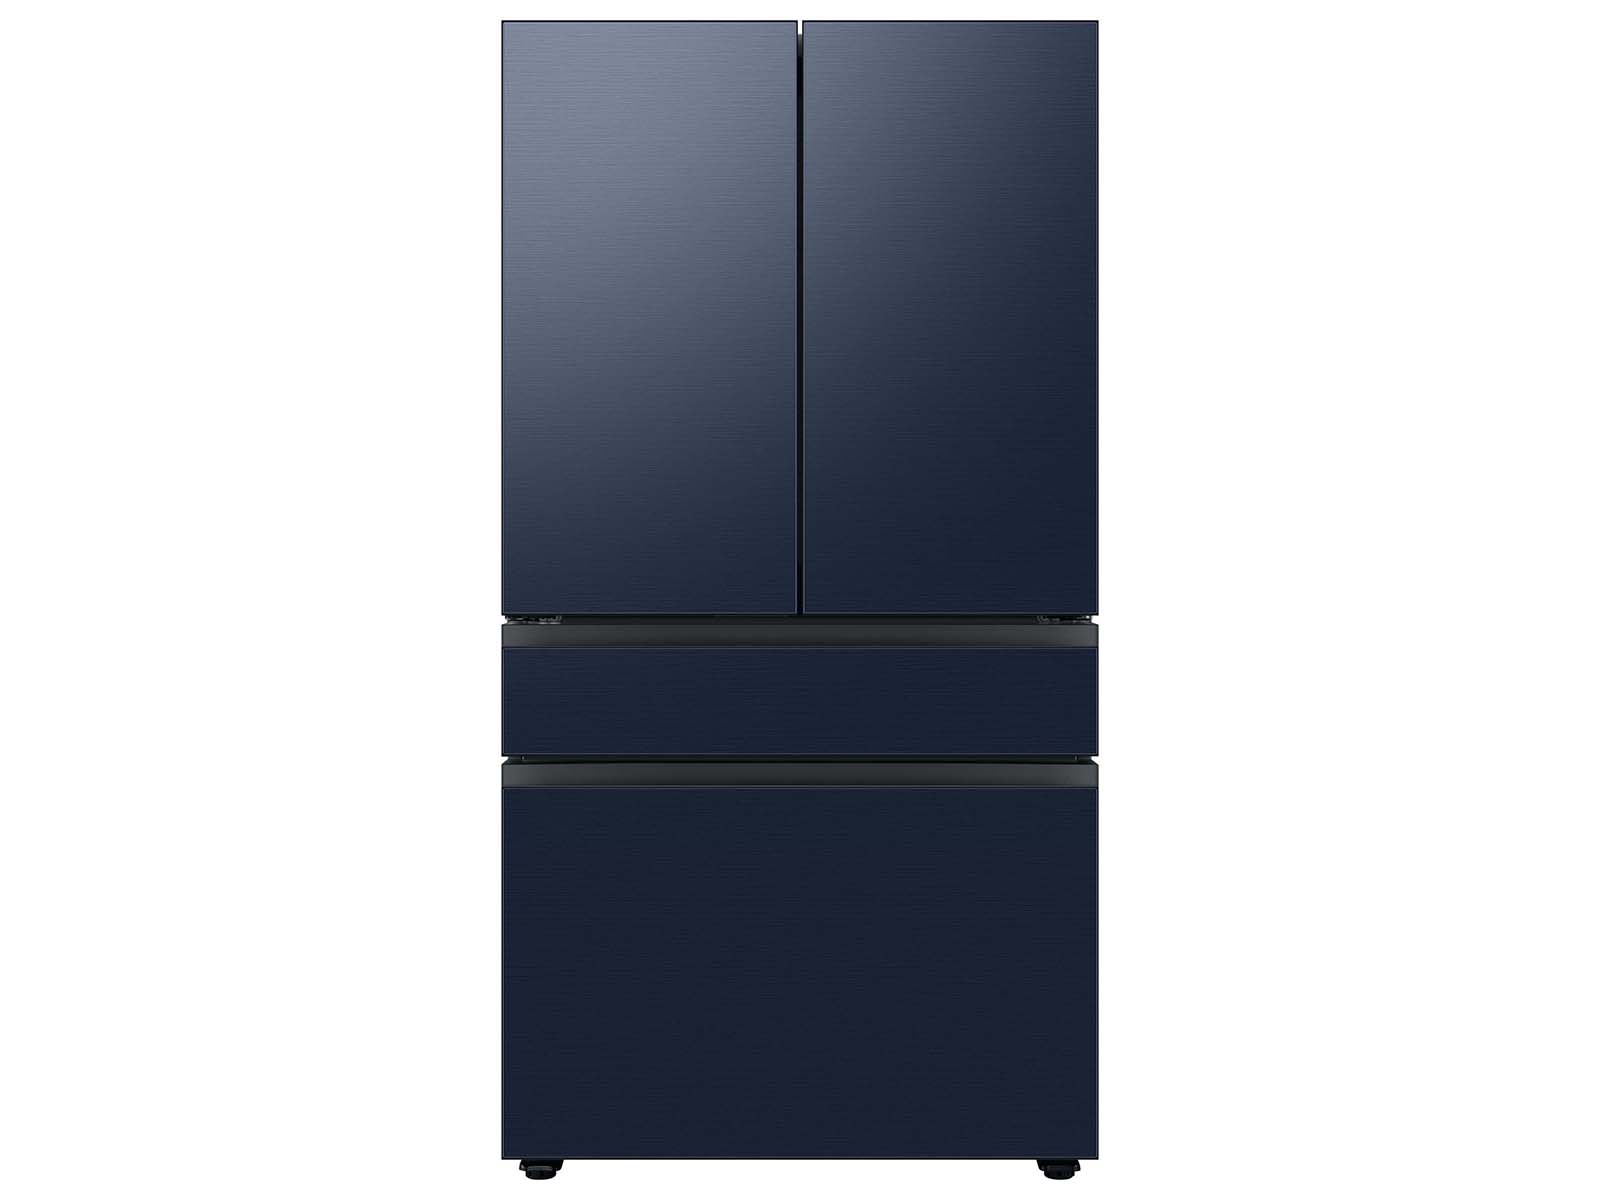 Bespoke 4-Door French Door Refrigerator (29 cu. ft.) with Customizable Door Panel Colors and Beverage Center™ in Navy Steel with Stainless Steel Middle Panel